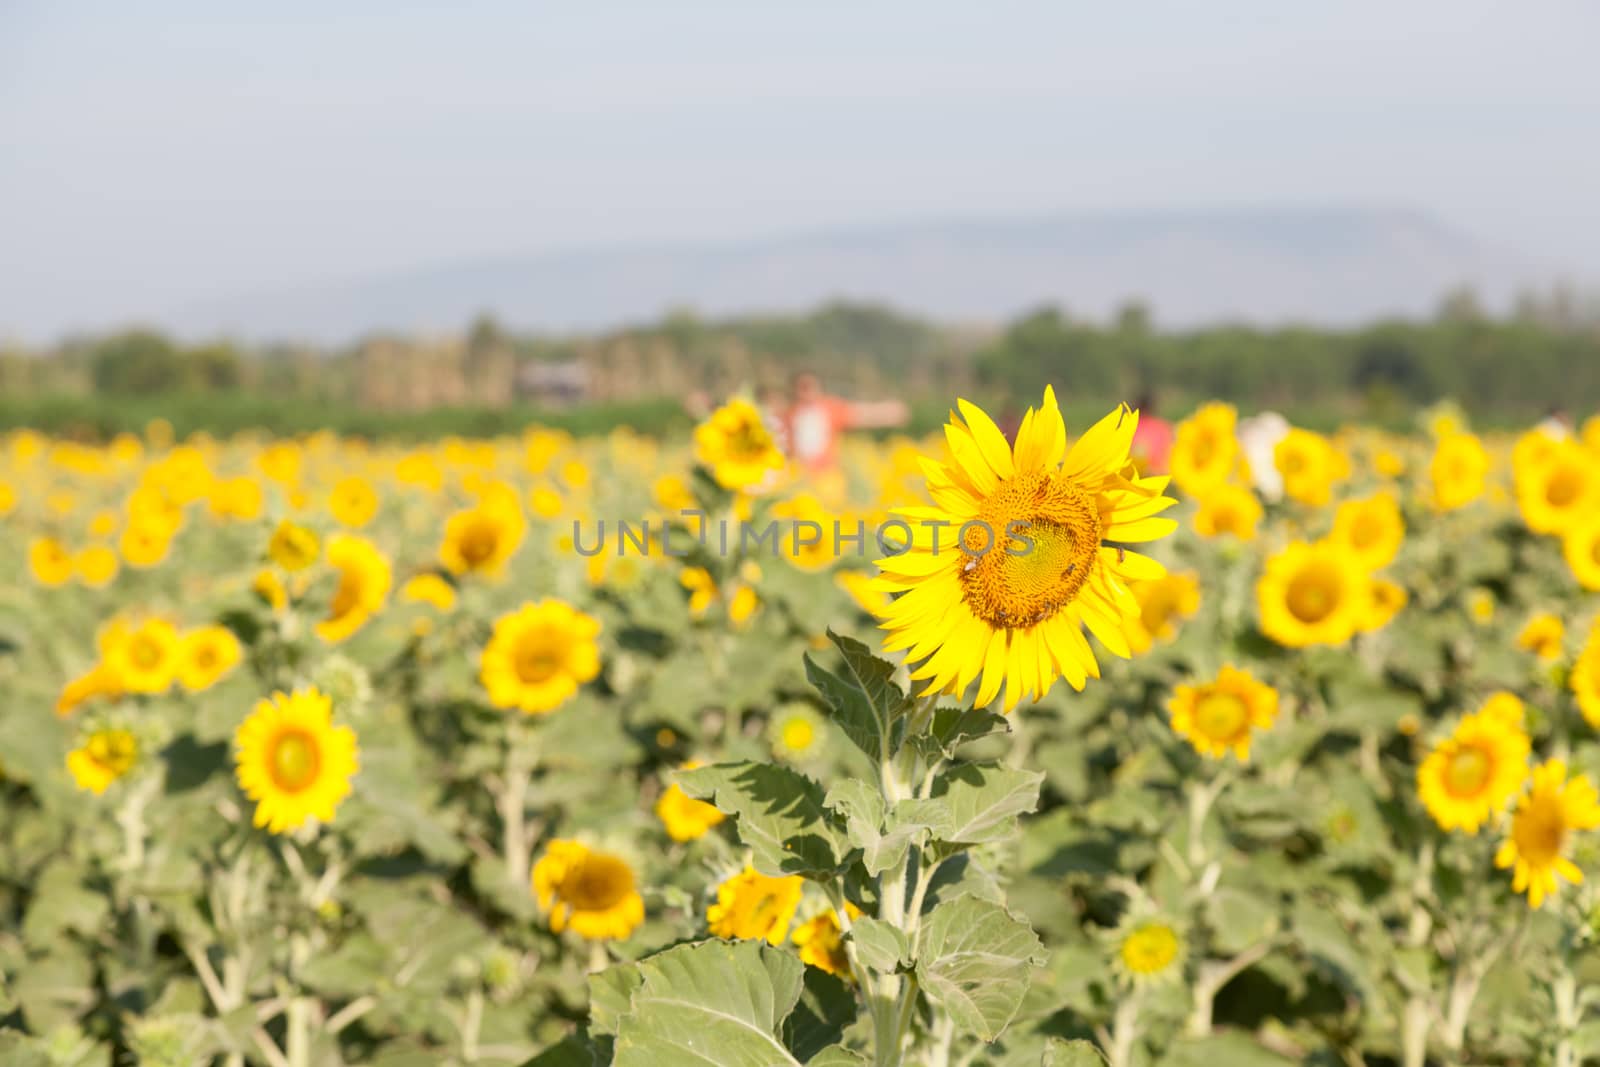 Sunflower in a field by a454